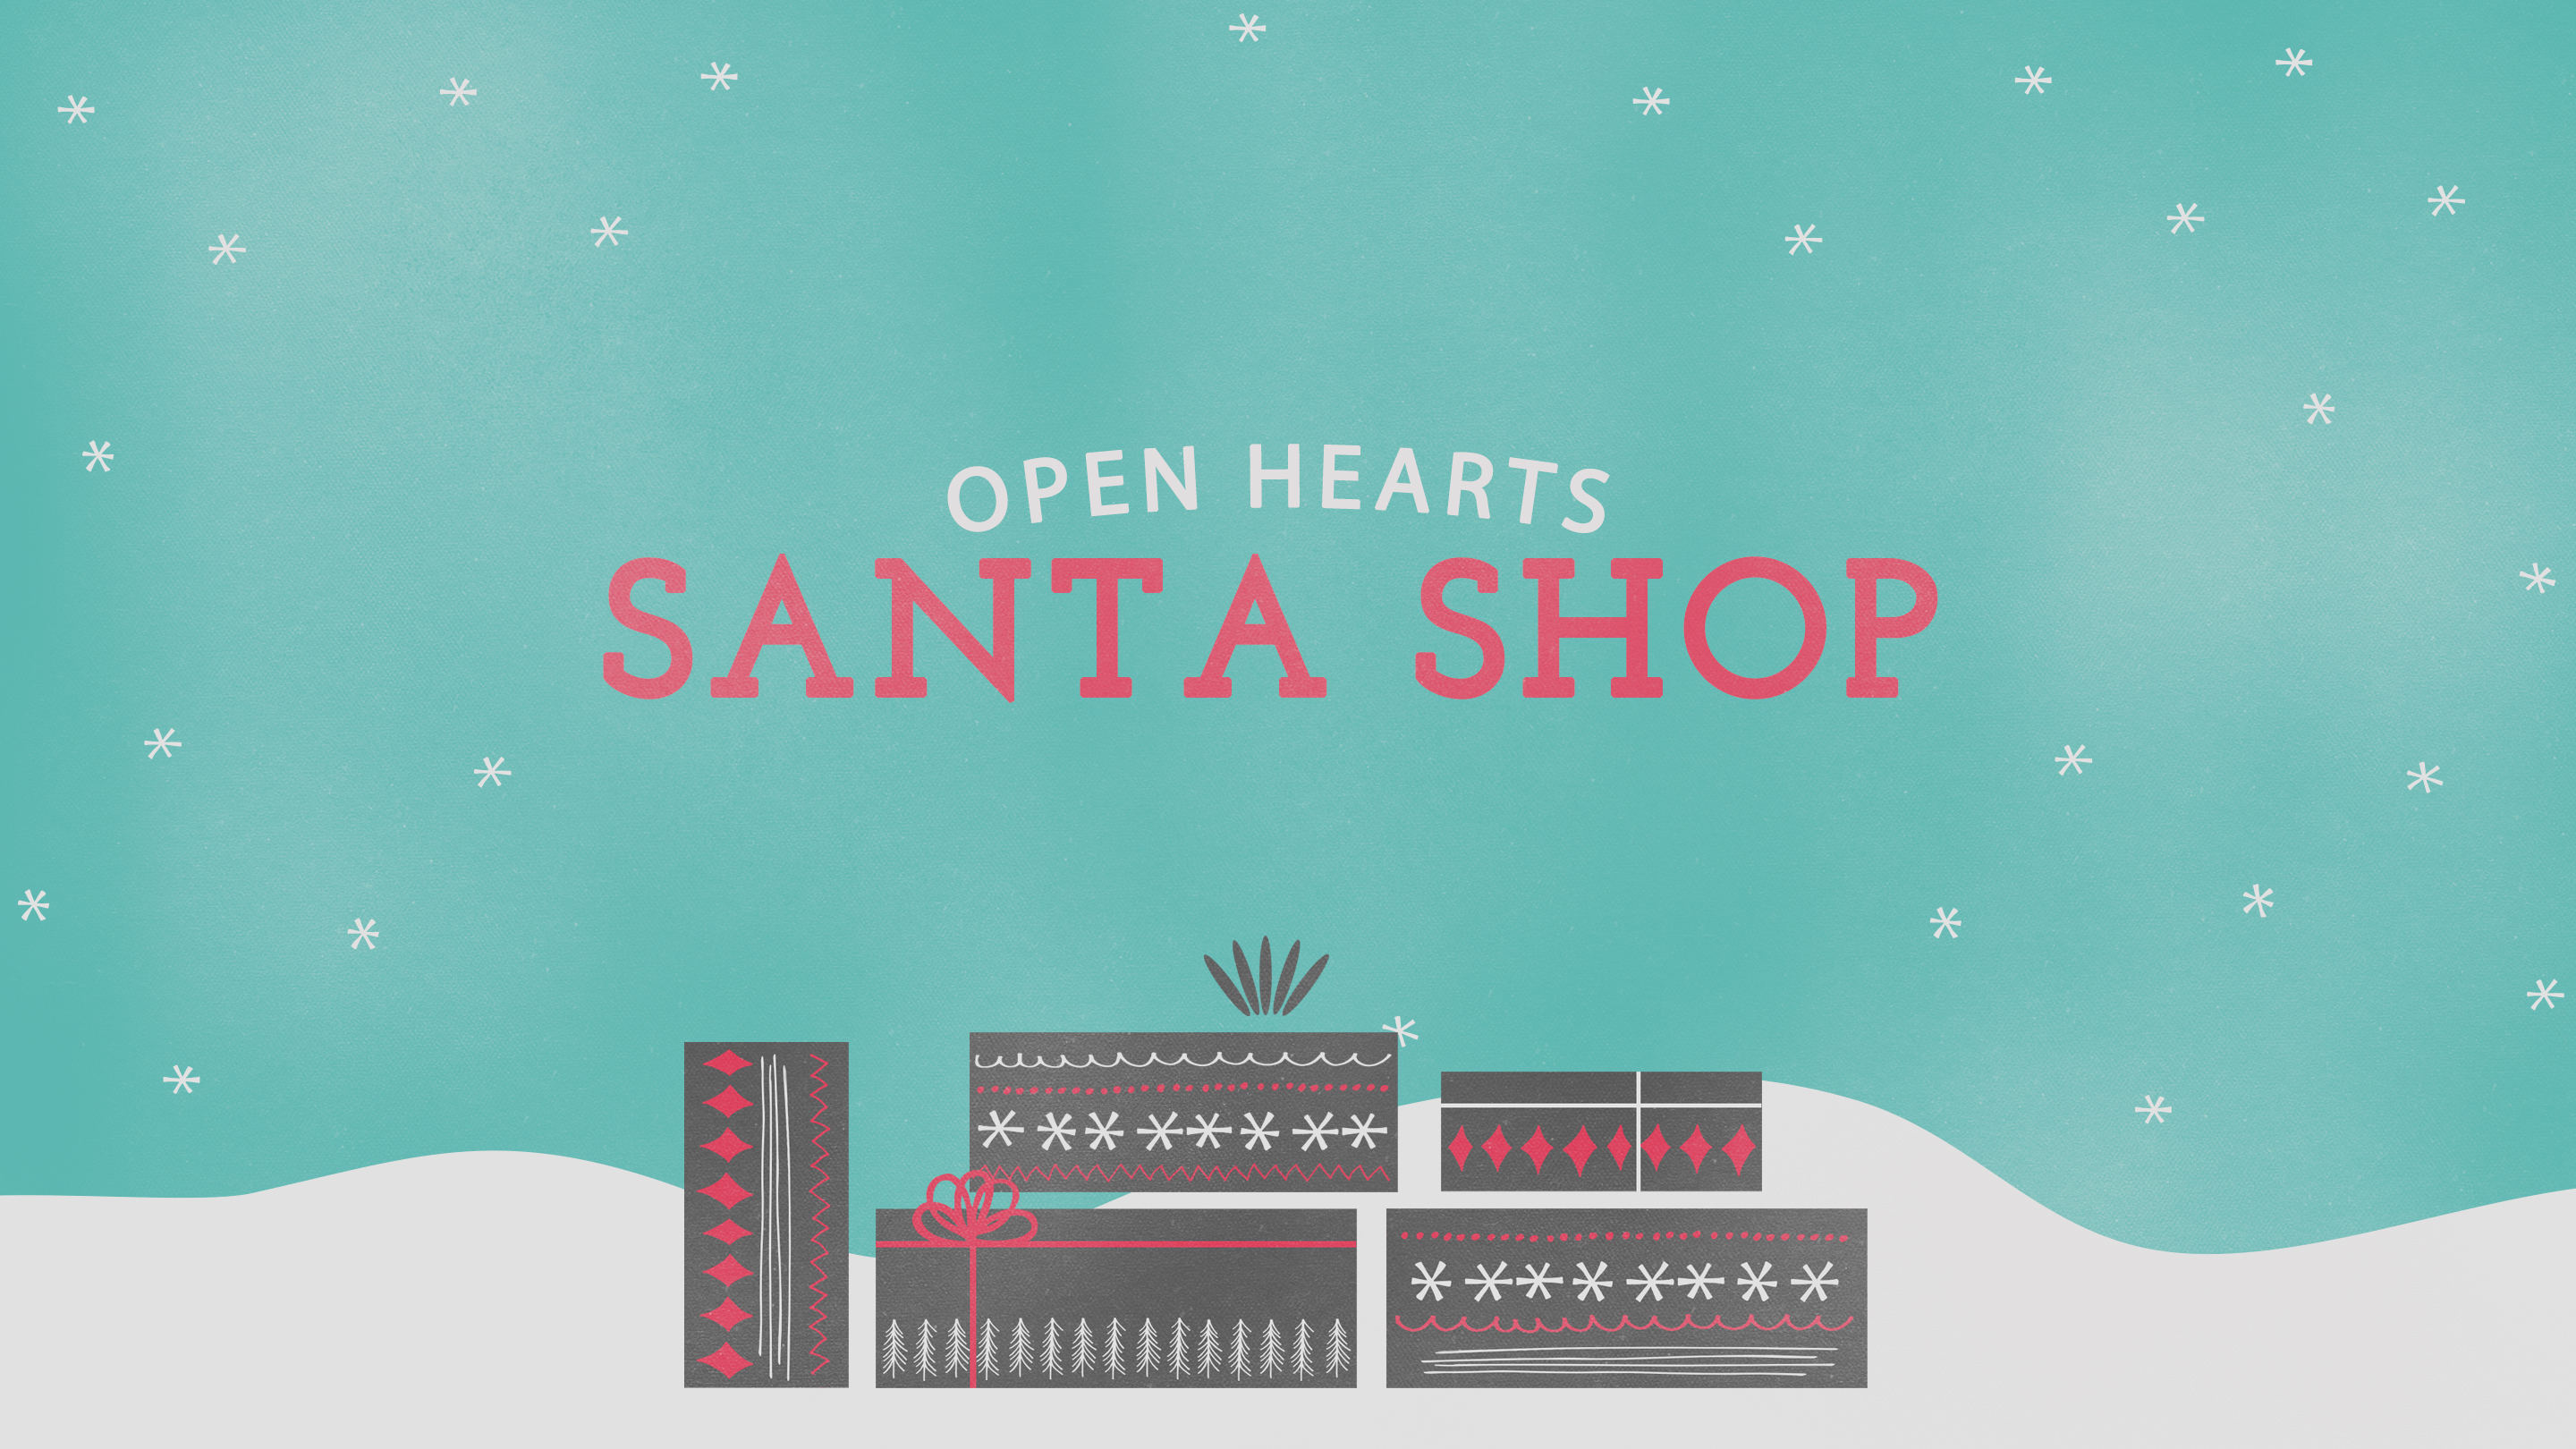 Open Hearts

Santa Shop
Saturday | 9:00am - 4:00pm
December 10
